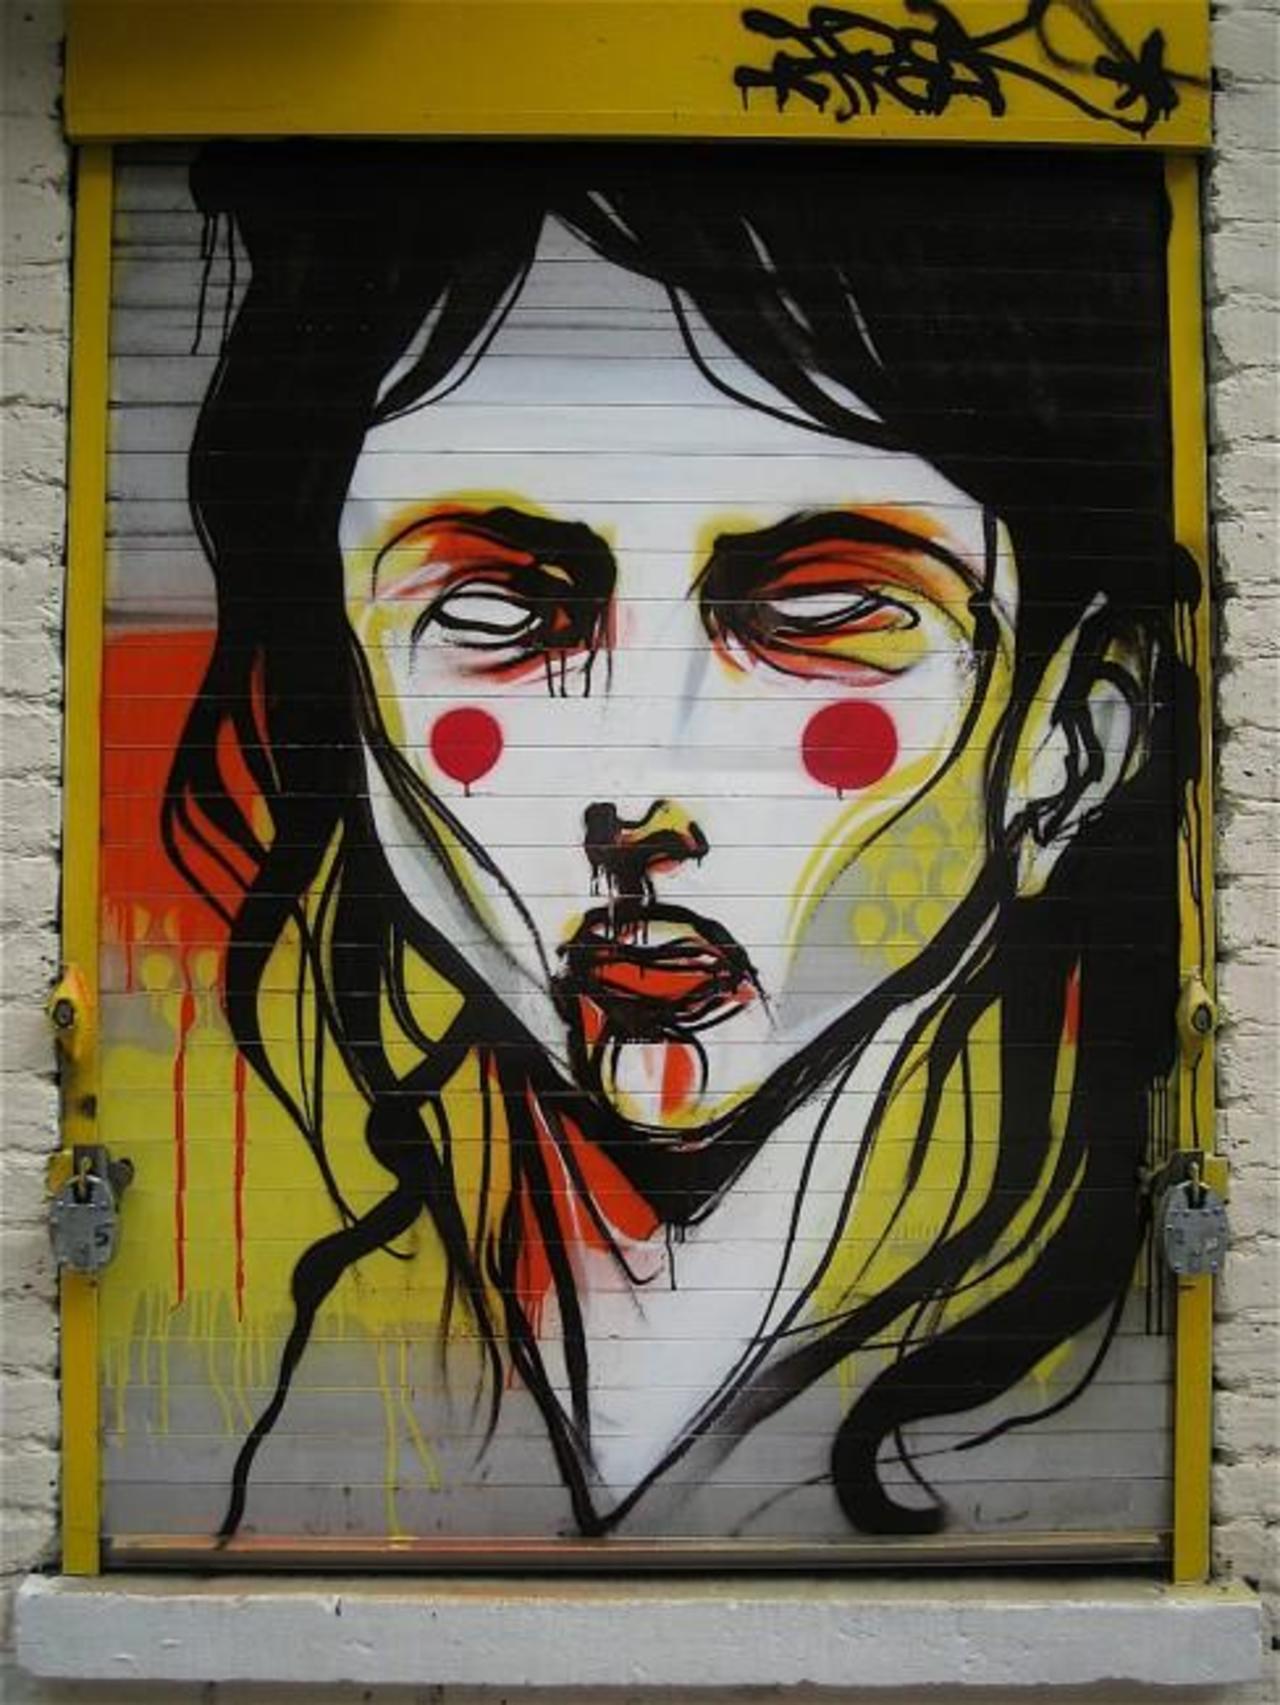 “@5putnik1: #streetart in Japan #graffiti  #art #japan #funky #dope . : http://t.co/AsjdibgLva” cool to see the #urbanwalls of japan